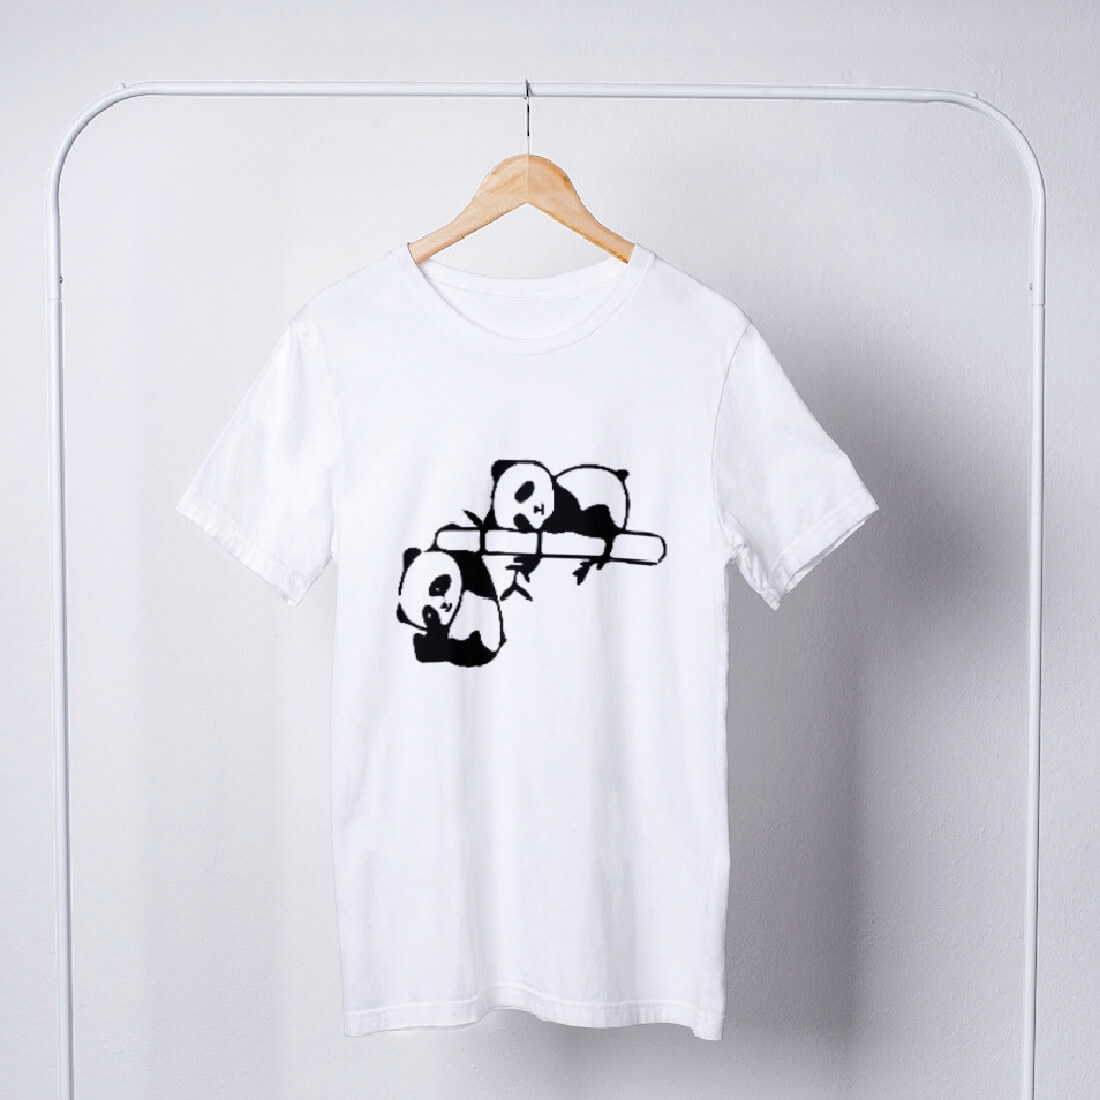 T-shirt Resting Panda Design Graphics preview image.